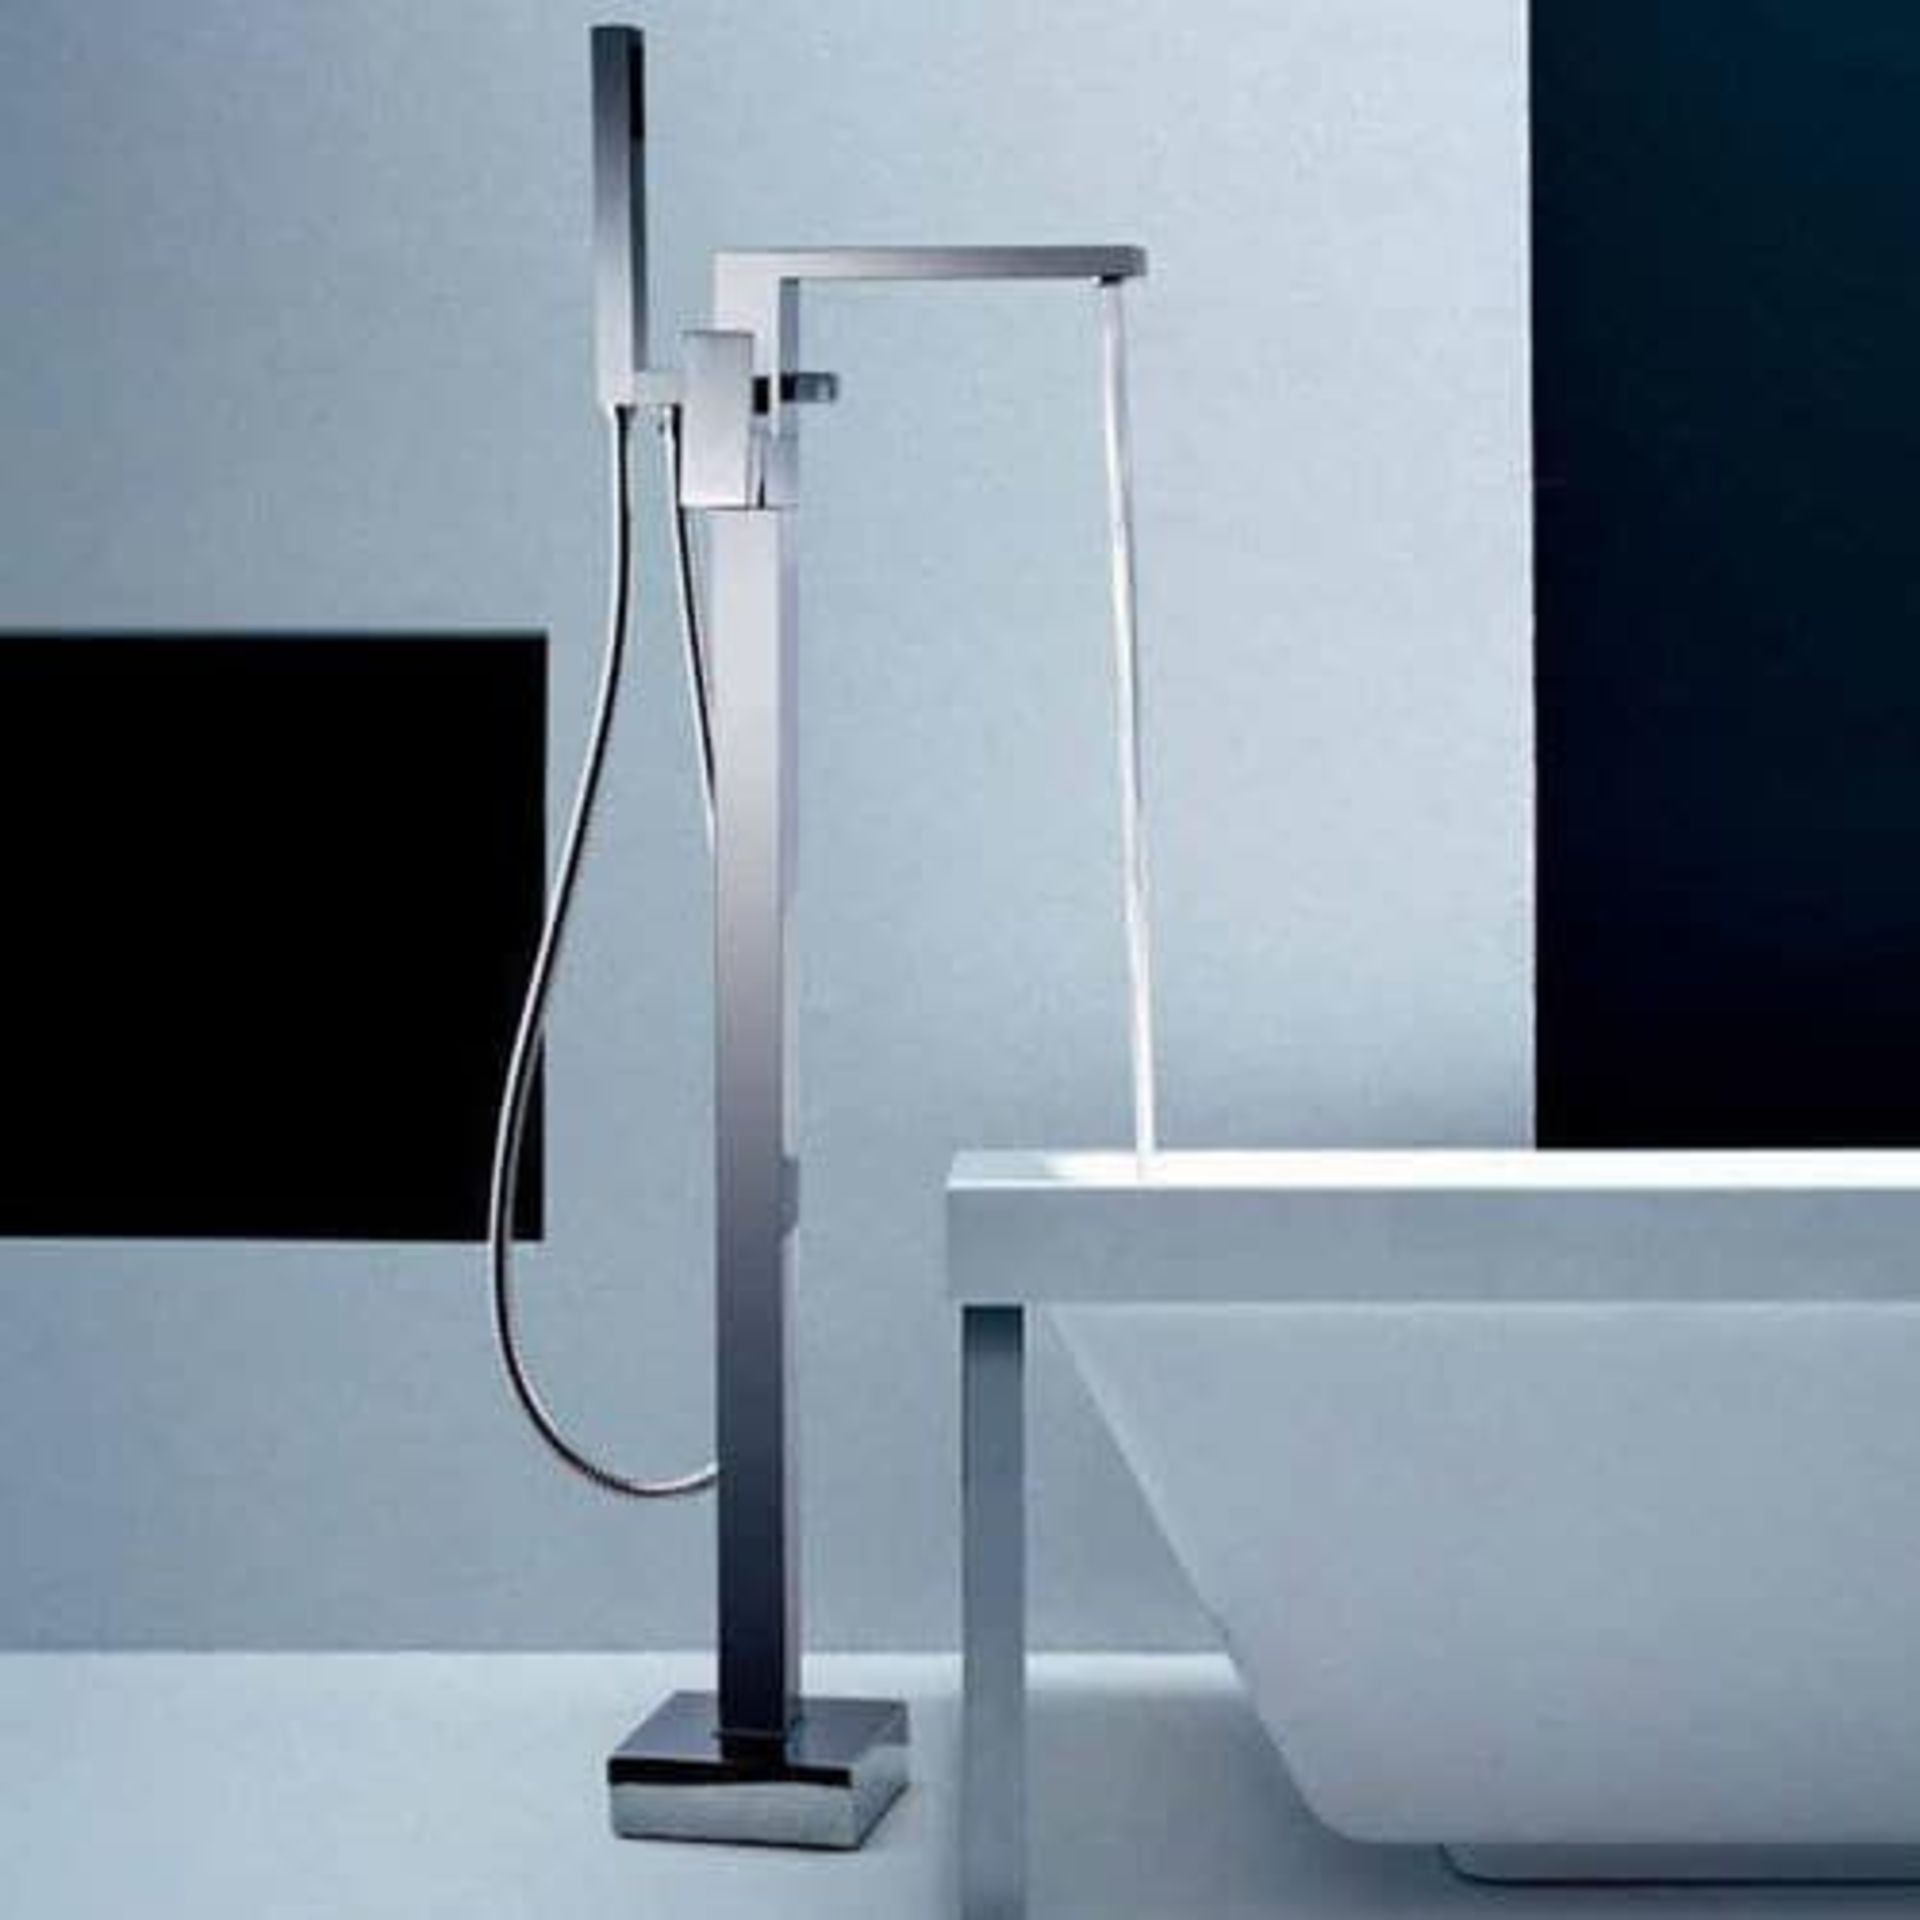 NEW (F8) Cuboid Freestanding Square Bath Shower Mixer Tap. Stunning Free standing bath shower t...